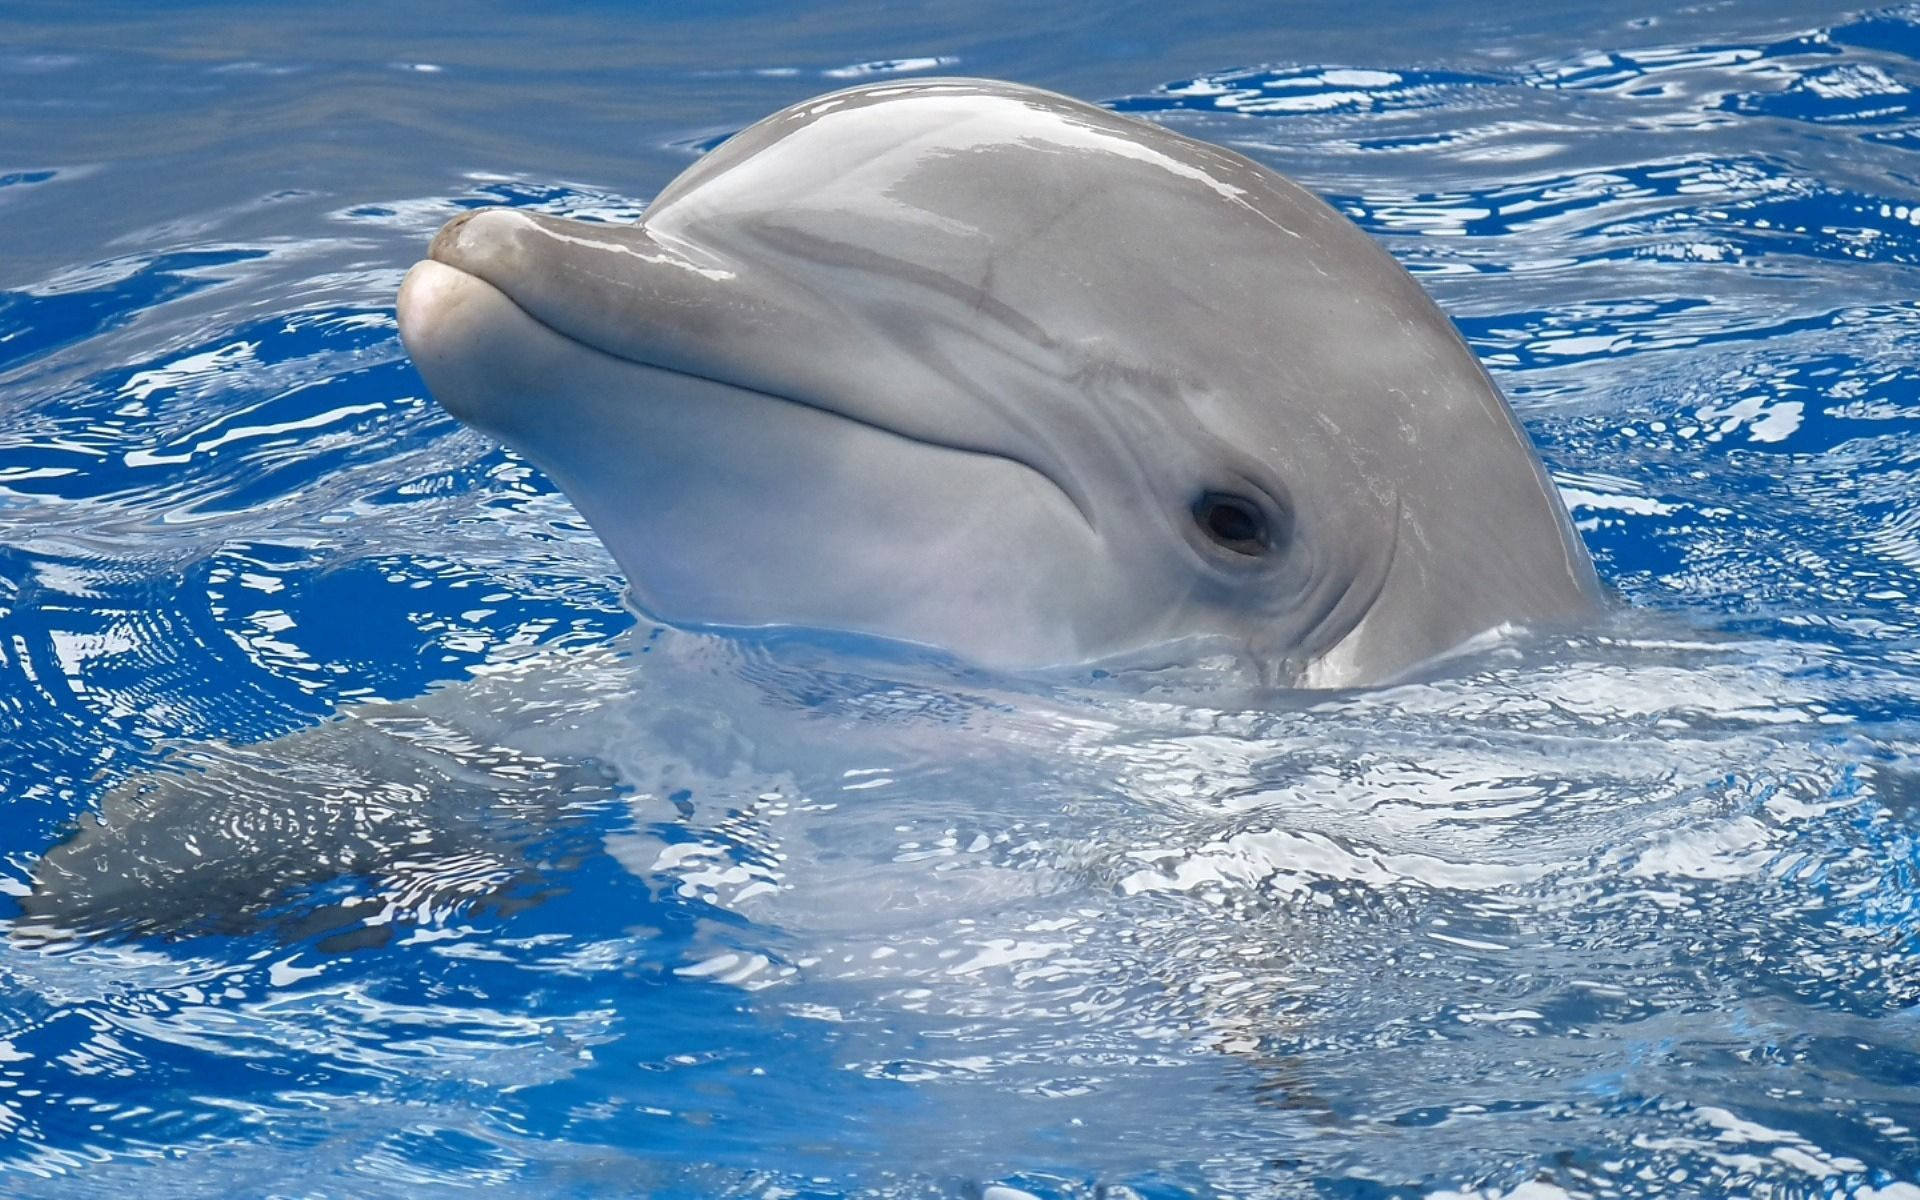  Delfin Hintergrundbild 1920x1200. Free Dolphin Wallpaper Downloads, Dolphin Wallpaper for FREE